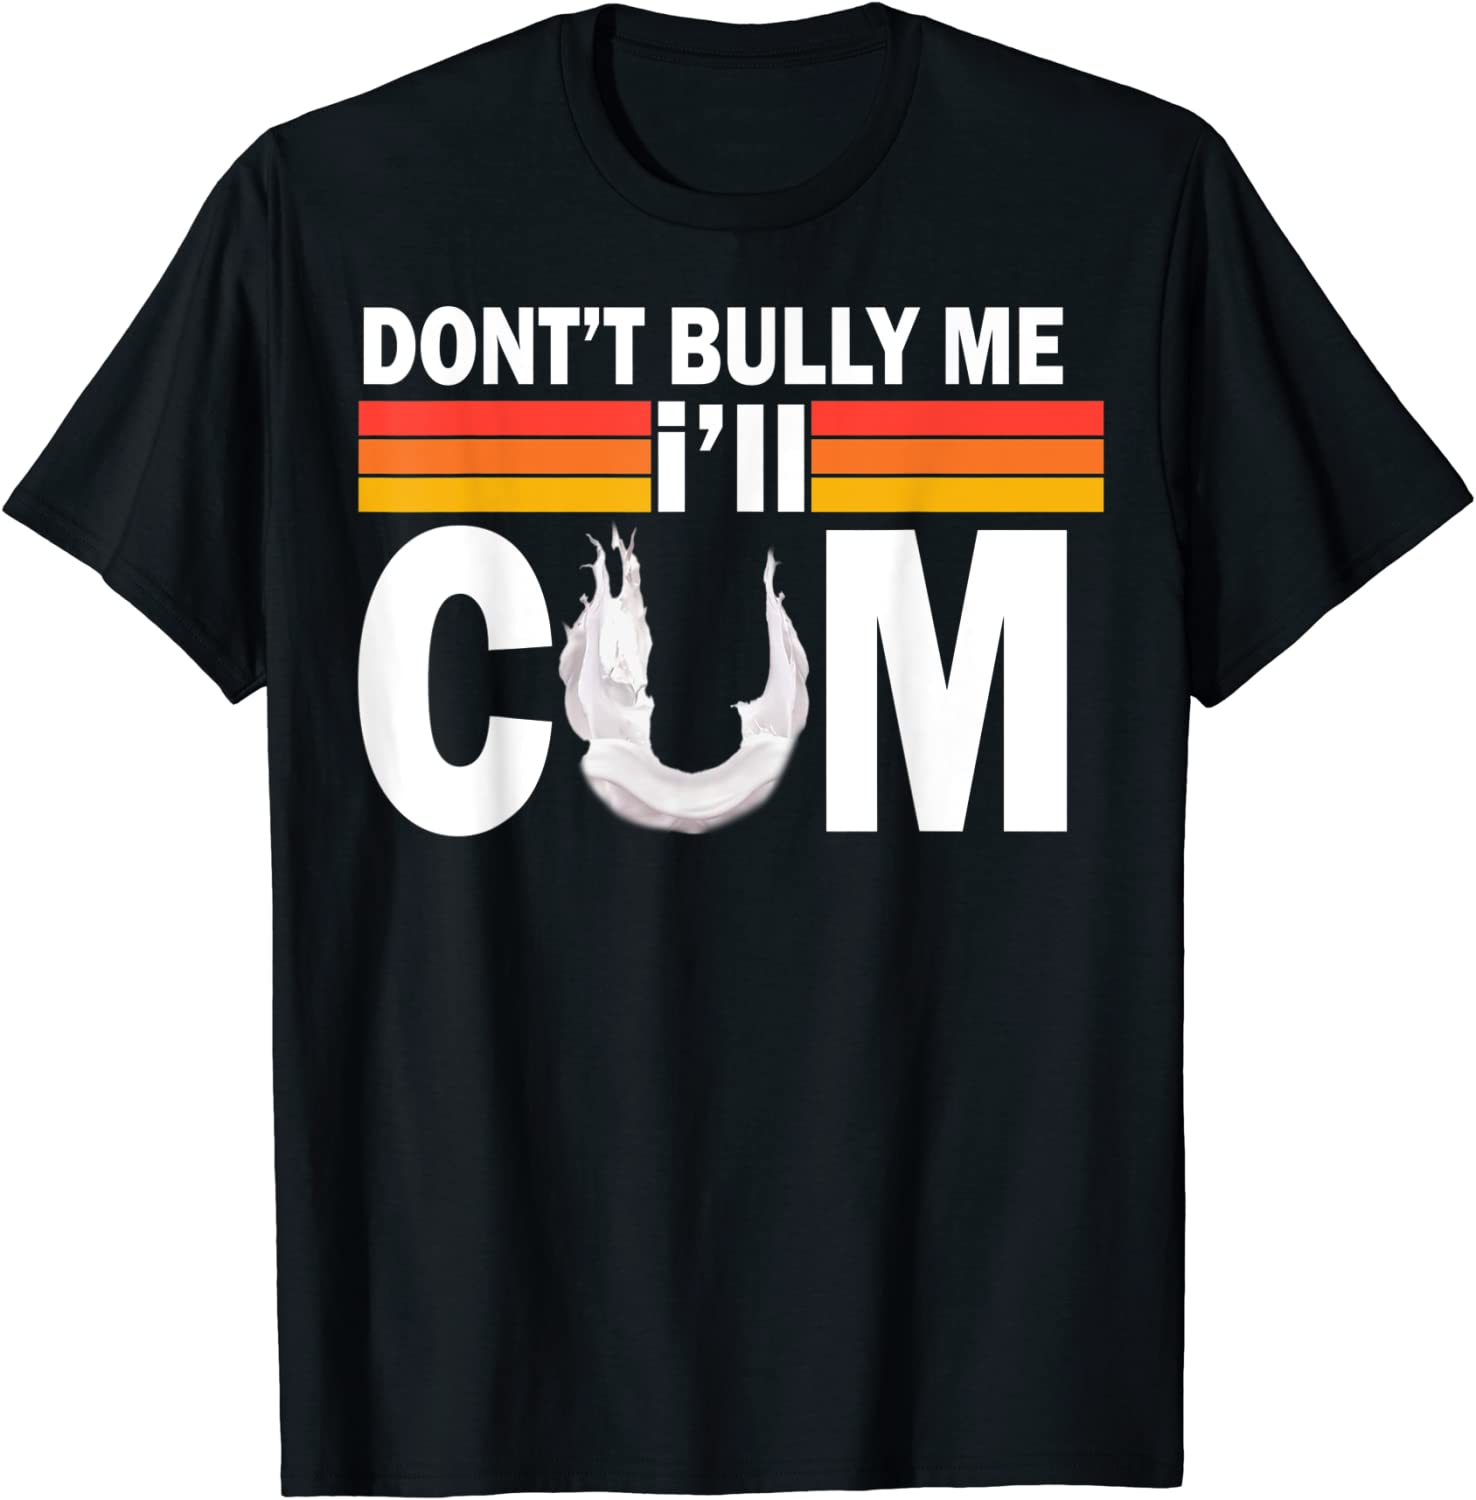 Don't Bully Me I'll Come Tee Shirt - ShirtElephant Office